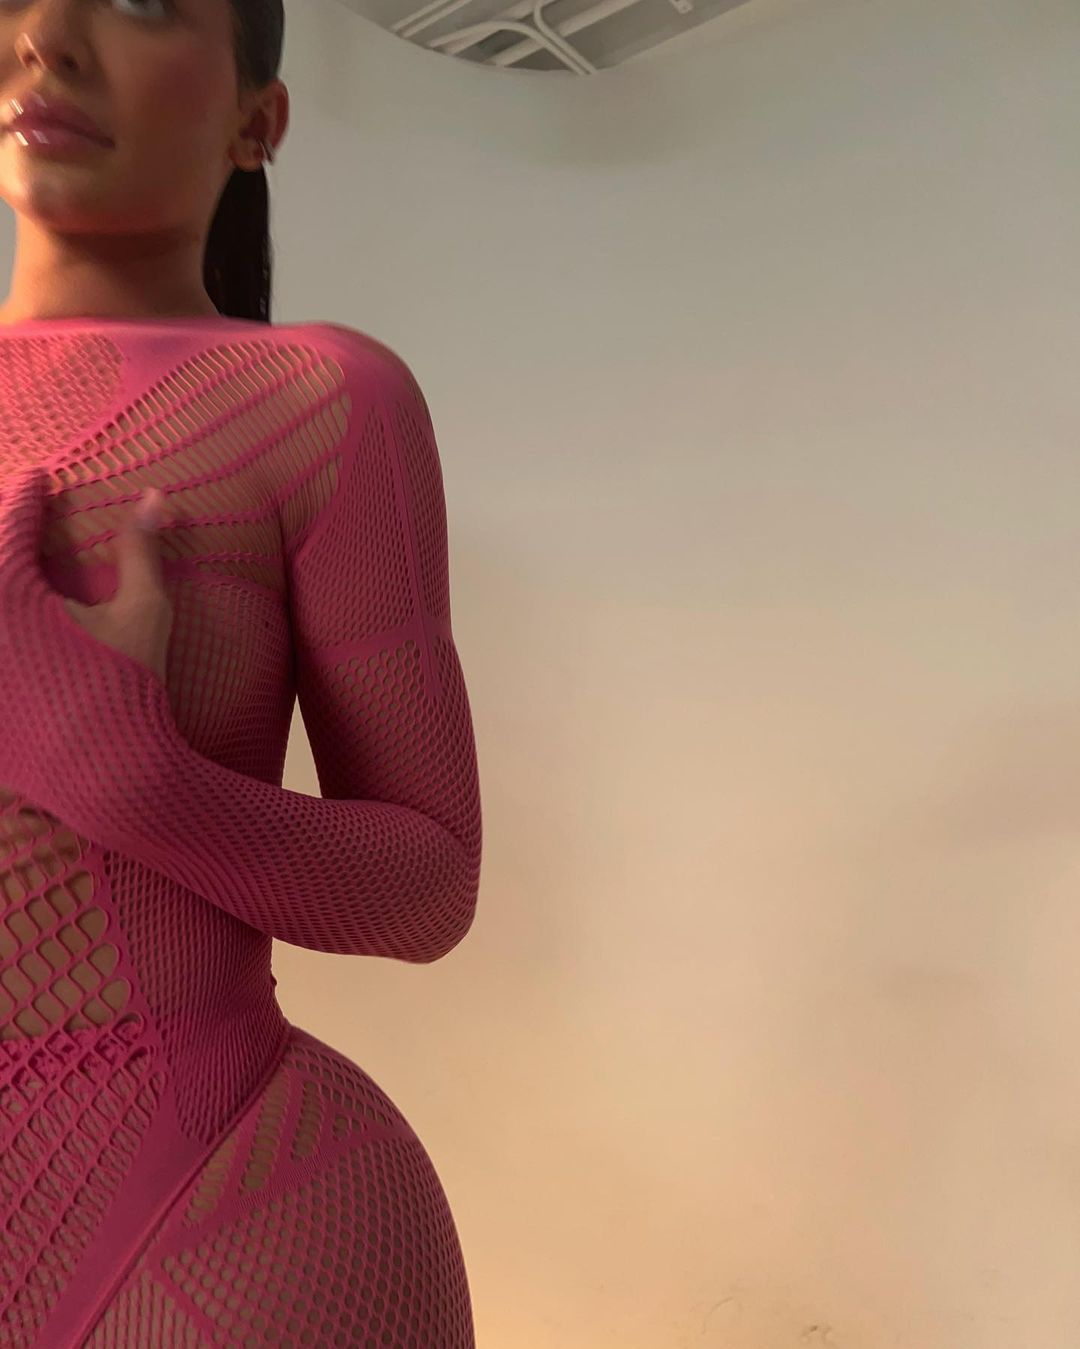 Kylie Jenner “Freed the Nipple” in a Jean Paul Gaultier X Lotta Volkova “Naked” Bikini